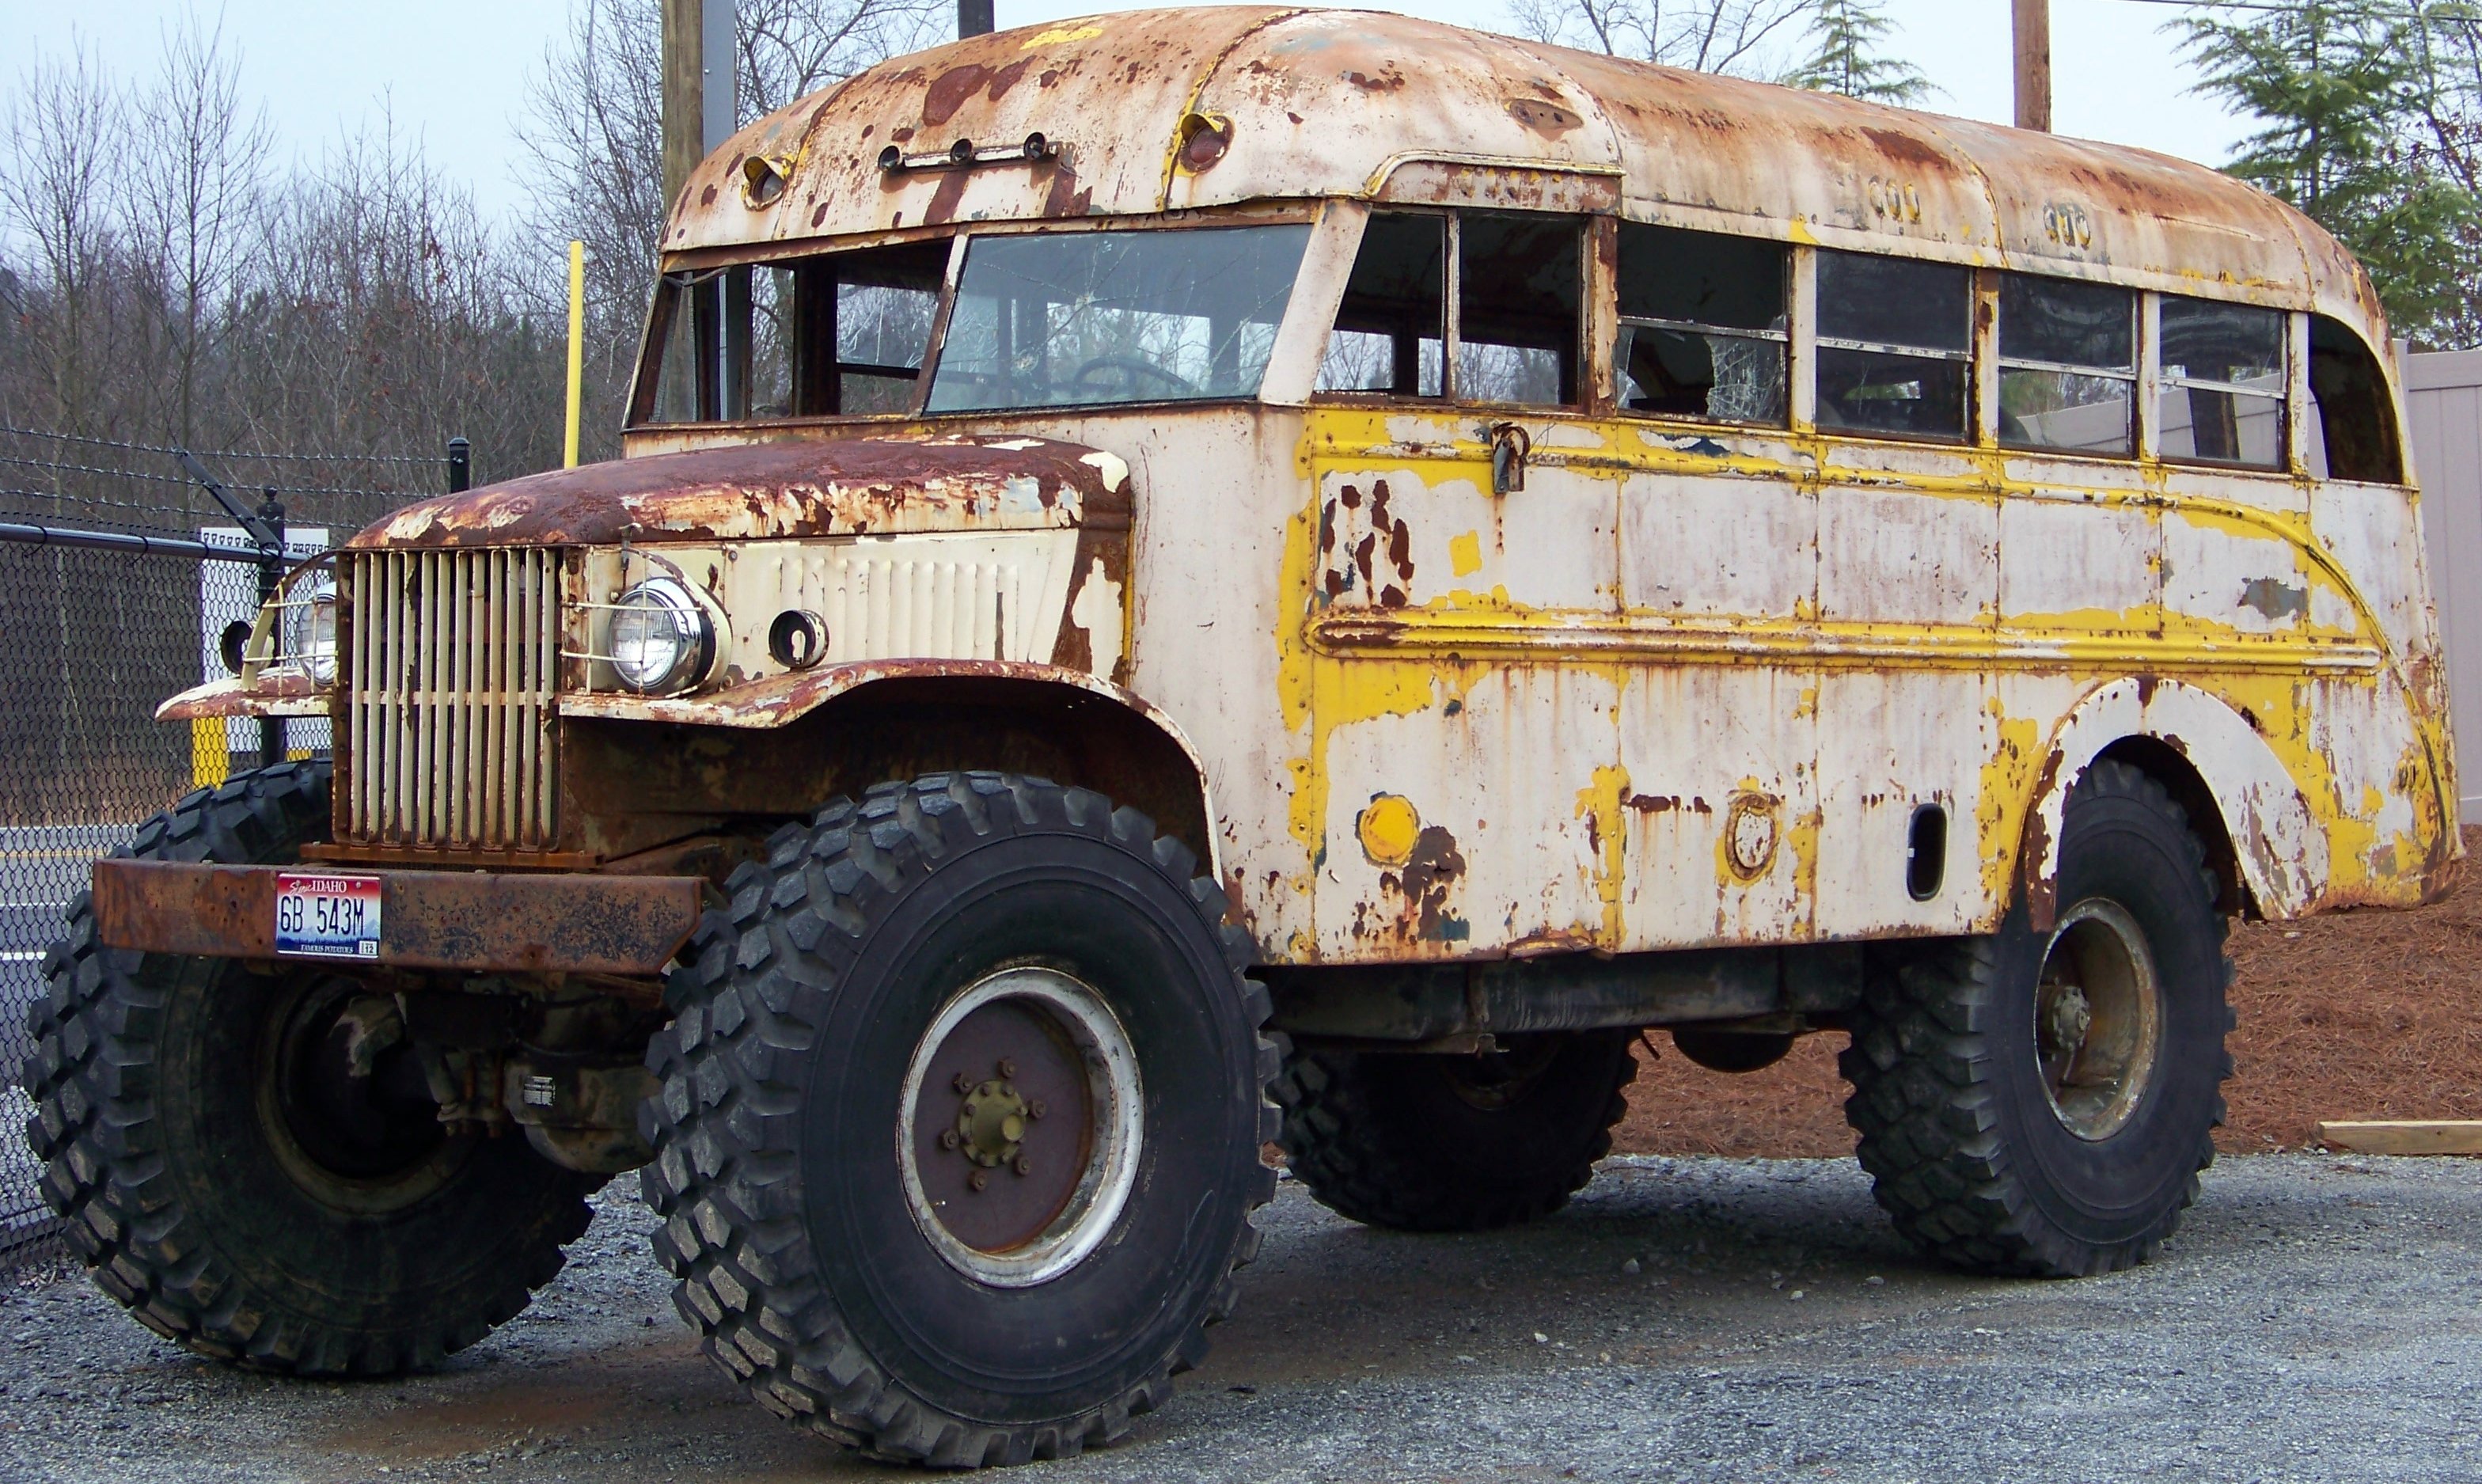 vehicles, bus Image for desktop